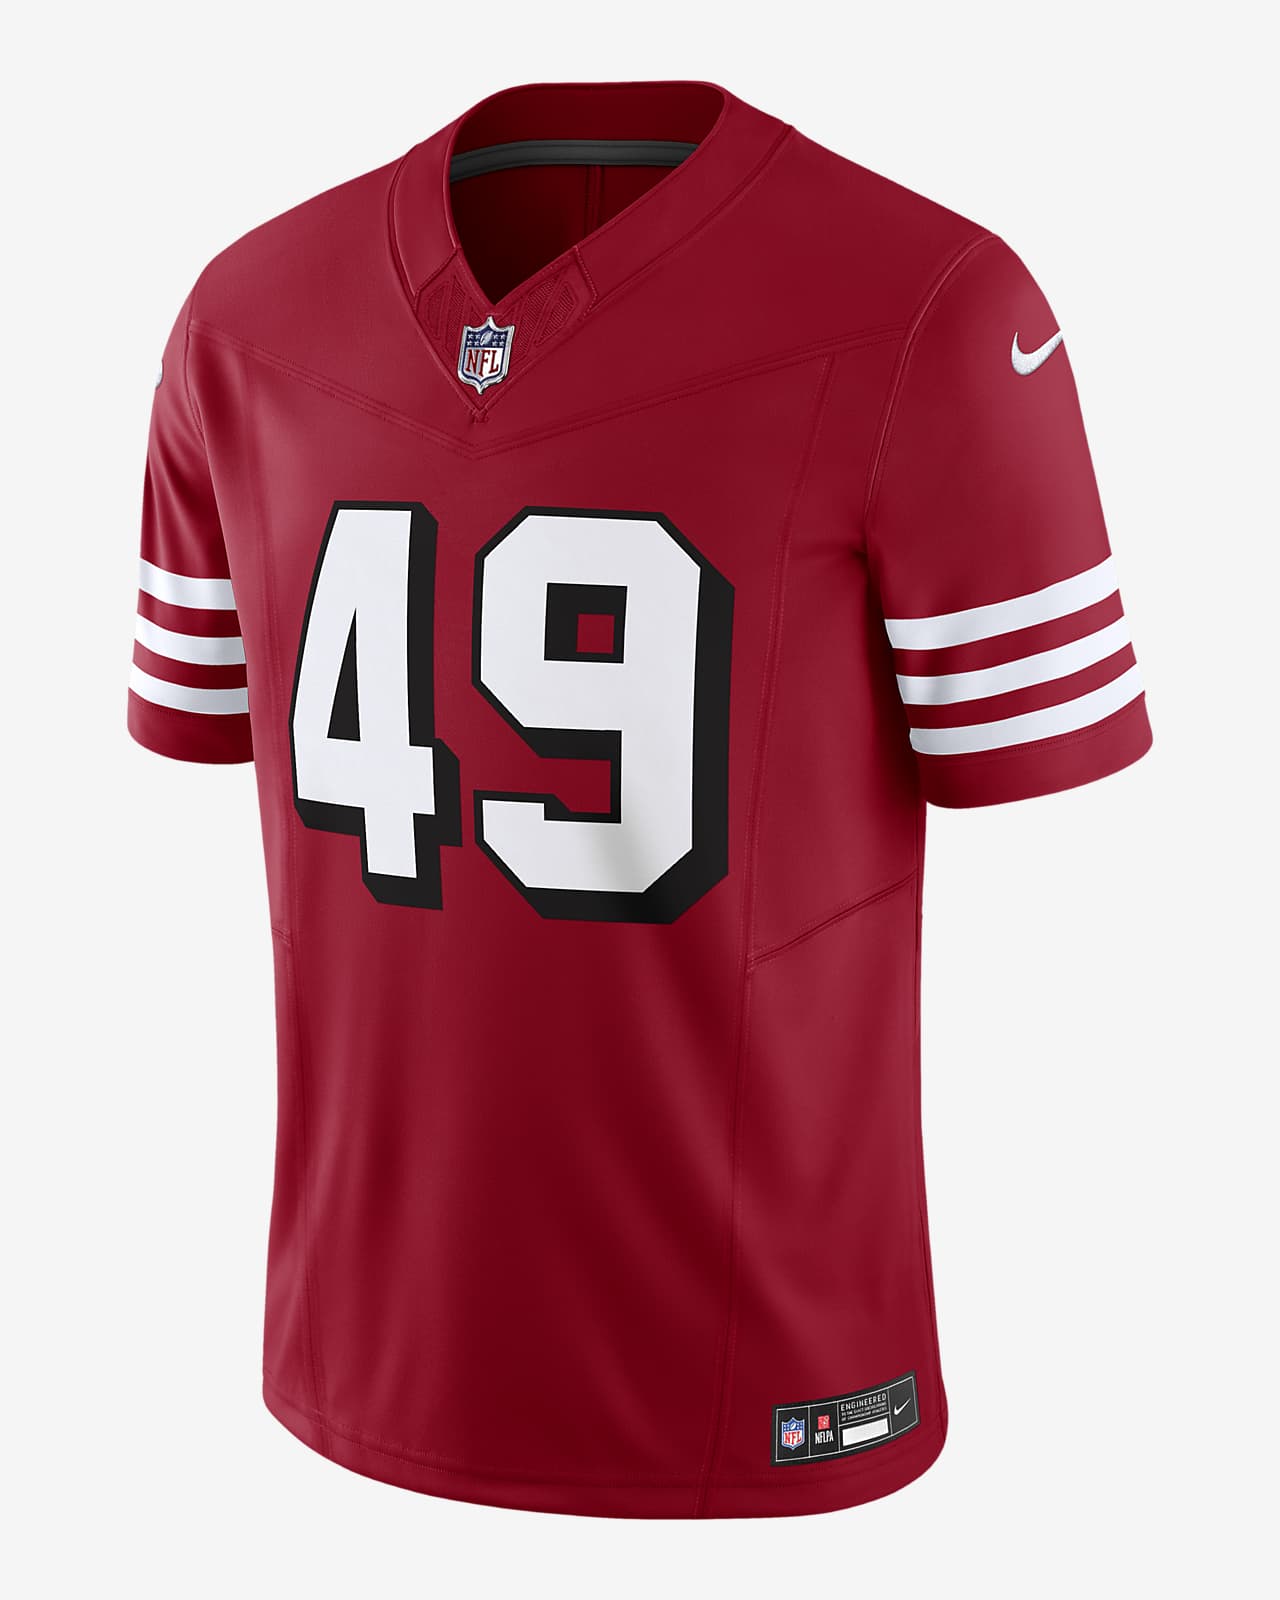 The Faithful San Francisco 49ers Men's Nike Dri-FIT NFL Limited Football  Jersey